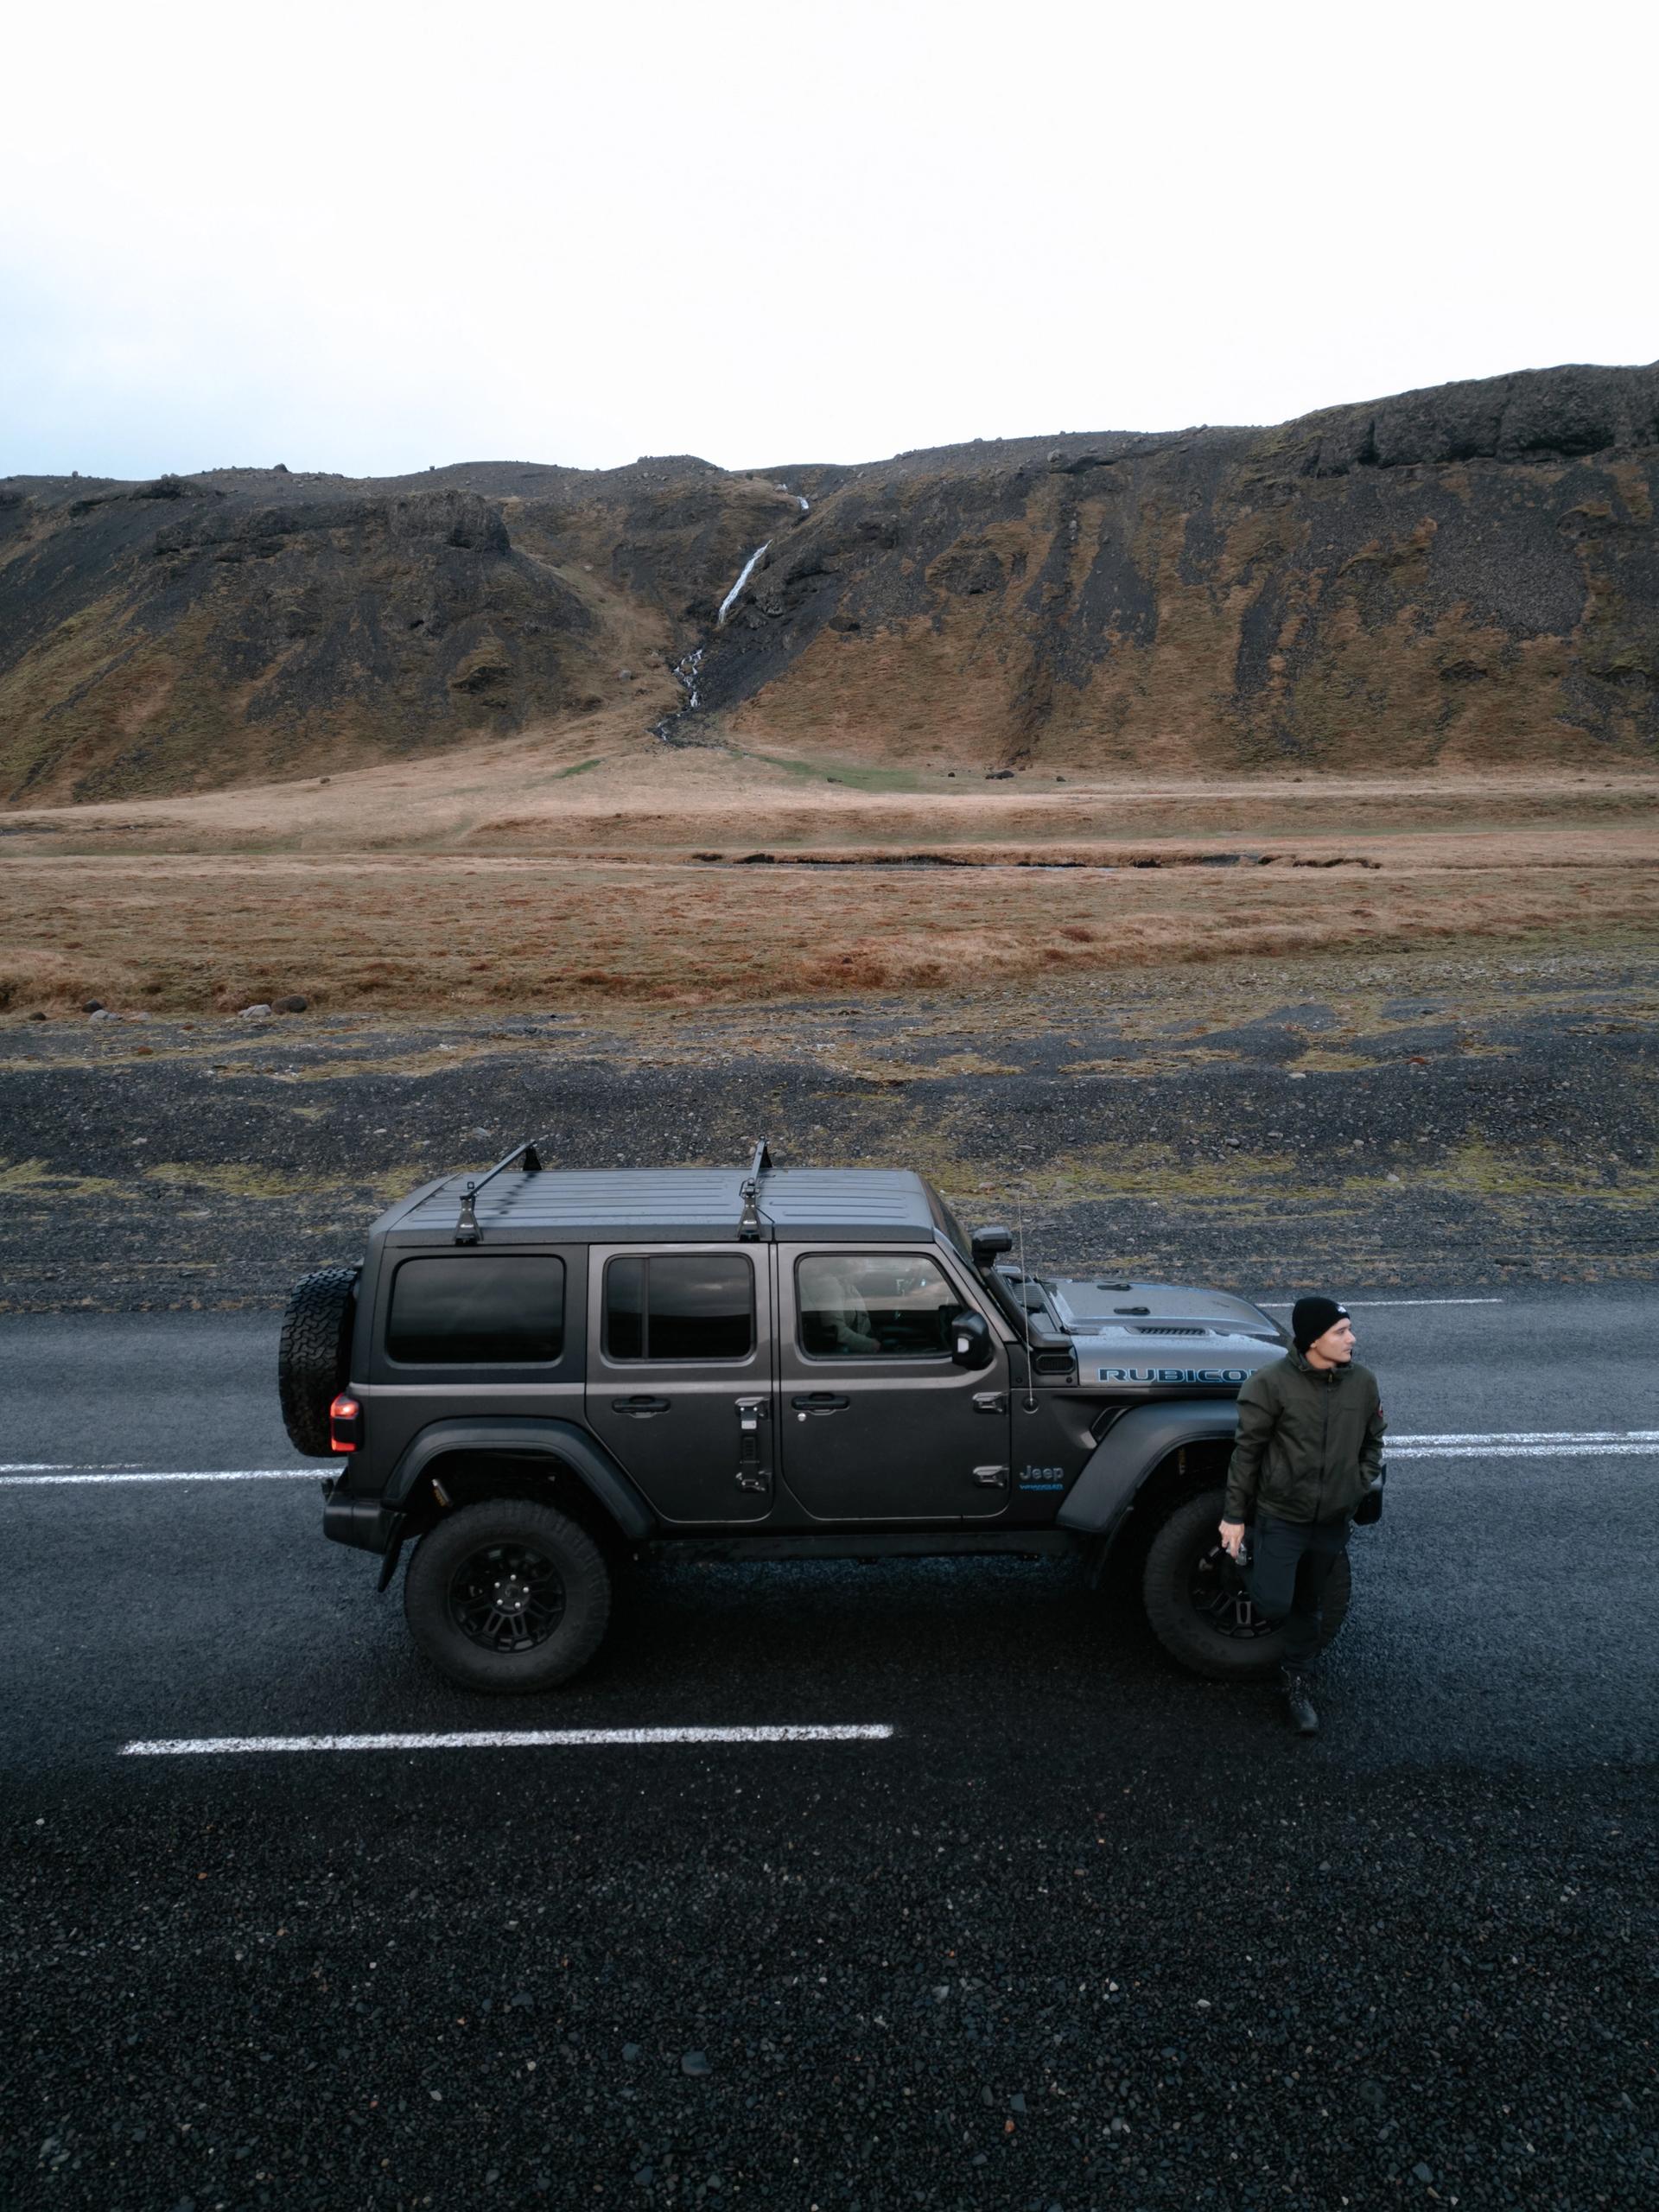 Jeep Wrangler 4x4 SUV Rental Car From Go Car Rental Iceland